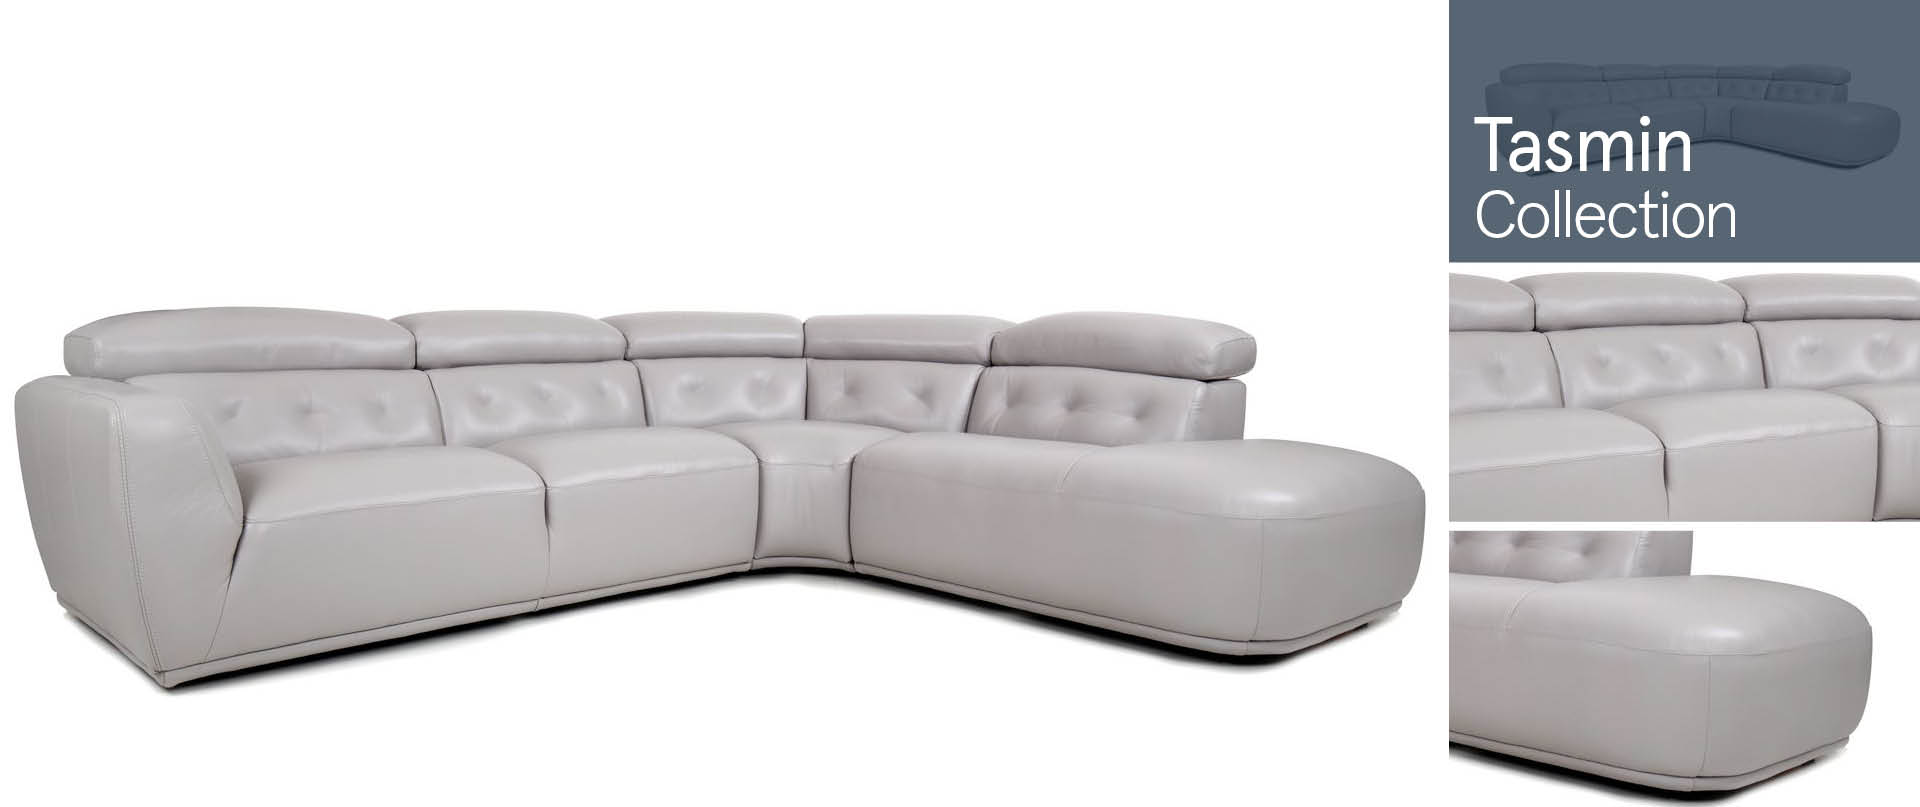 Tasmin Leather Sofa Ranges